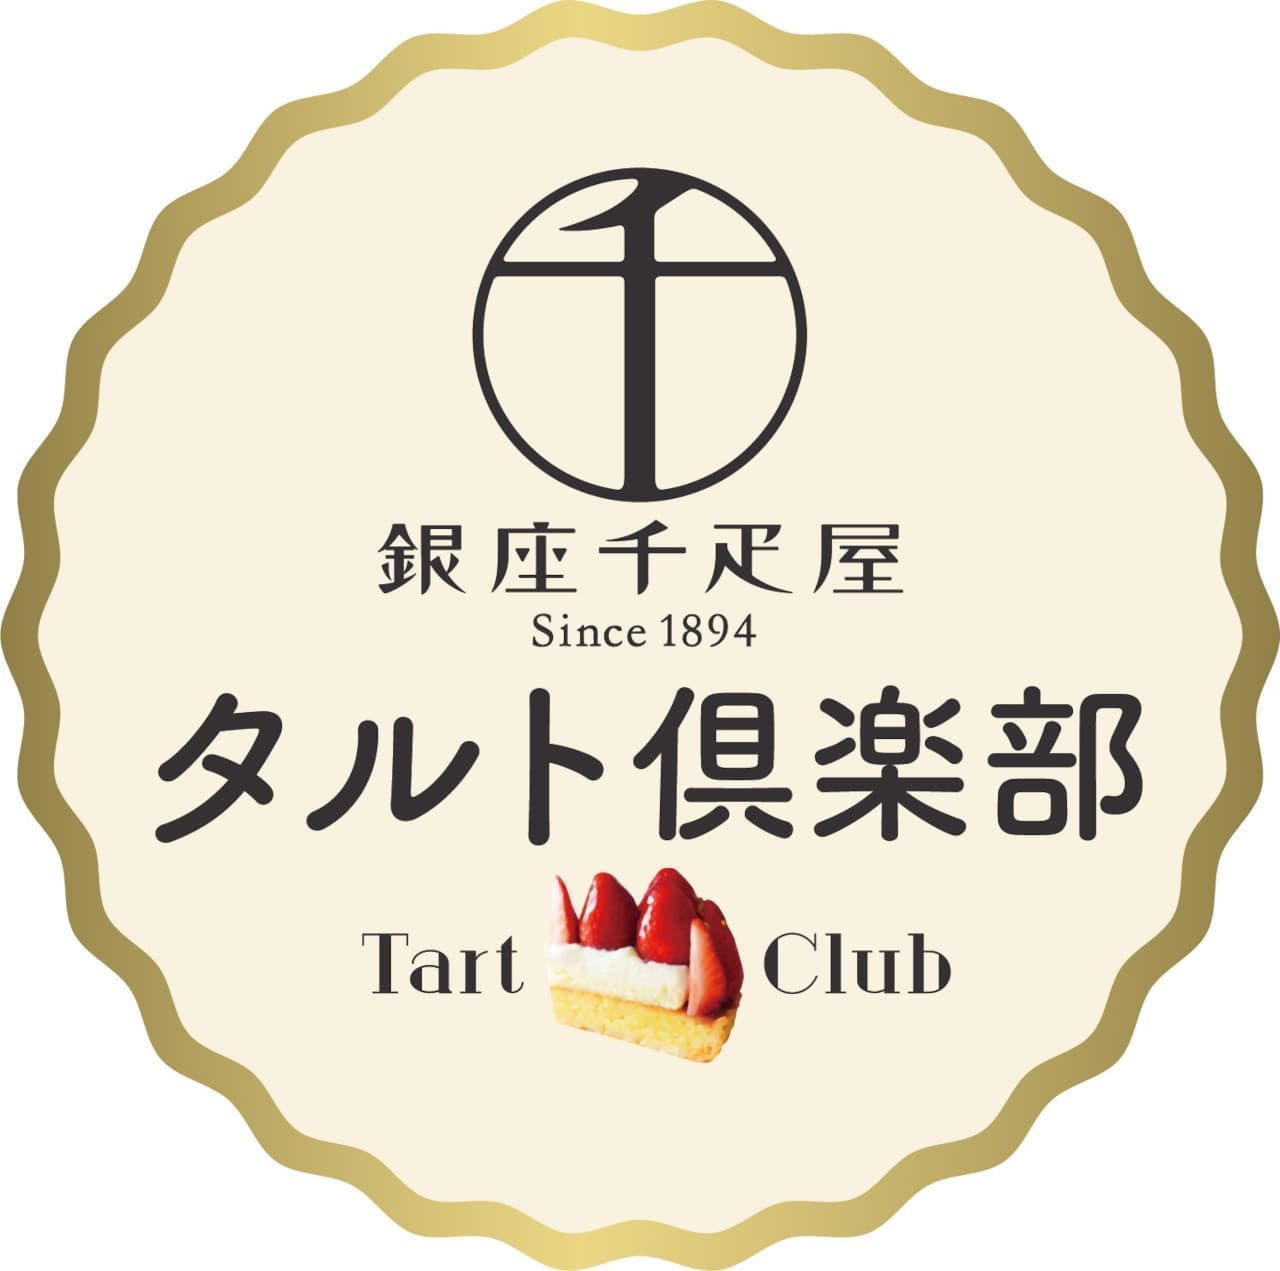 Ginza Sembikiya "Tarte Club" series